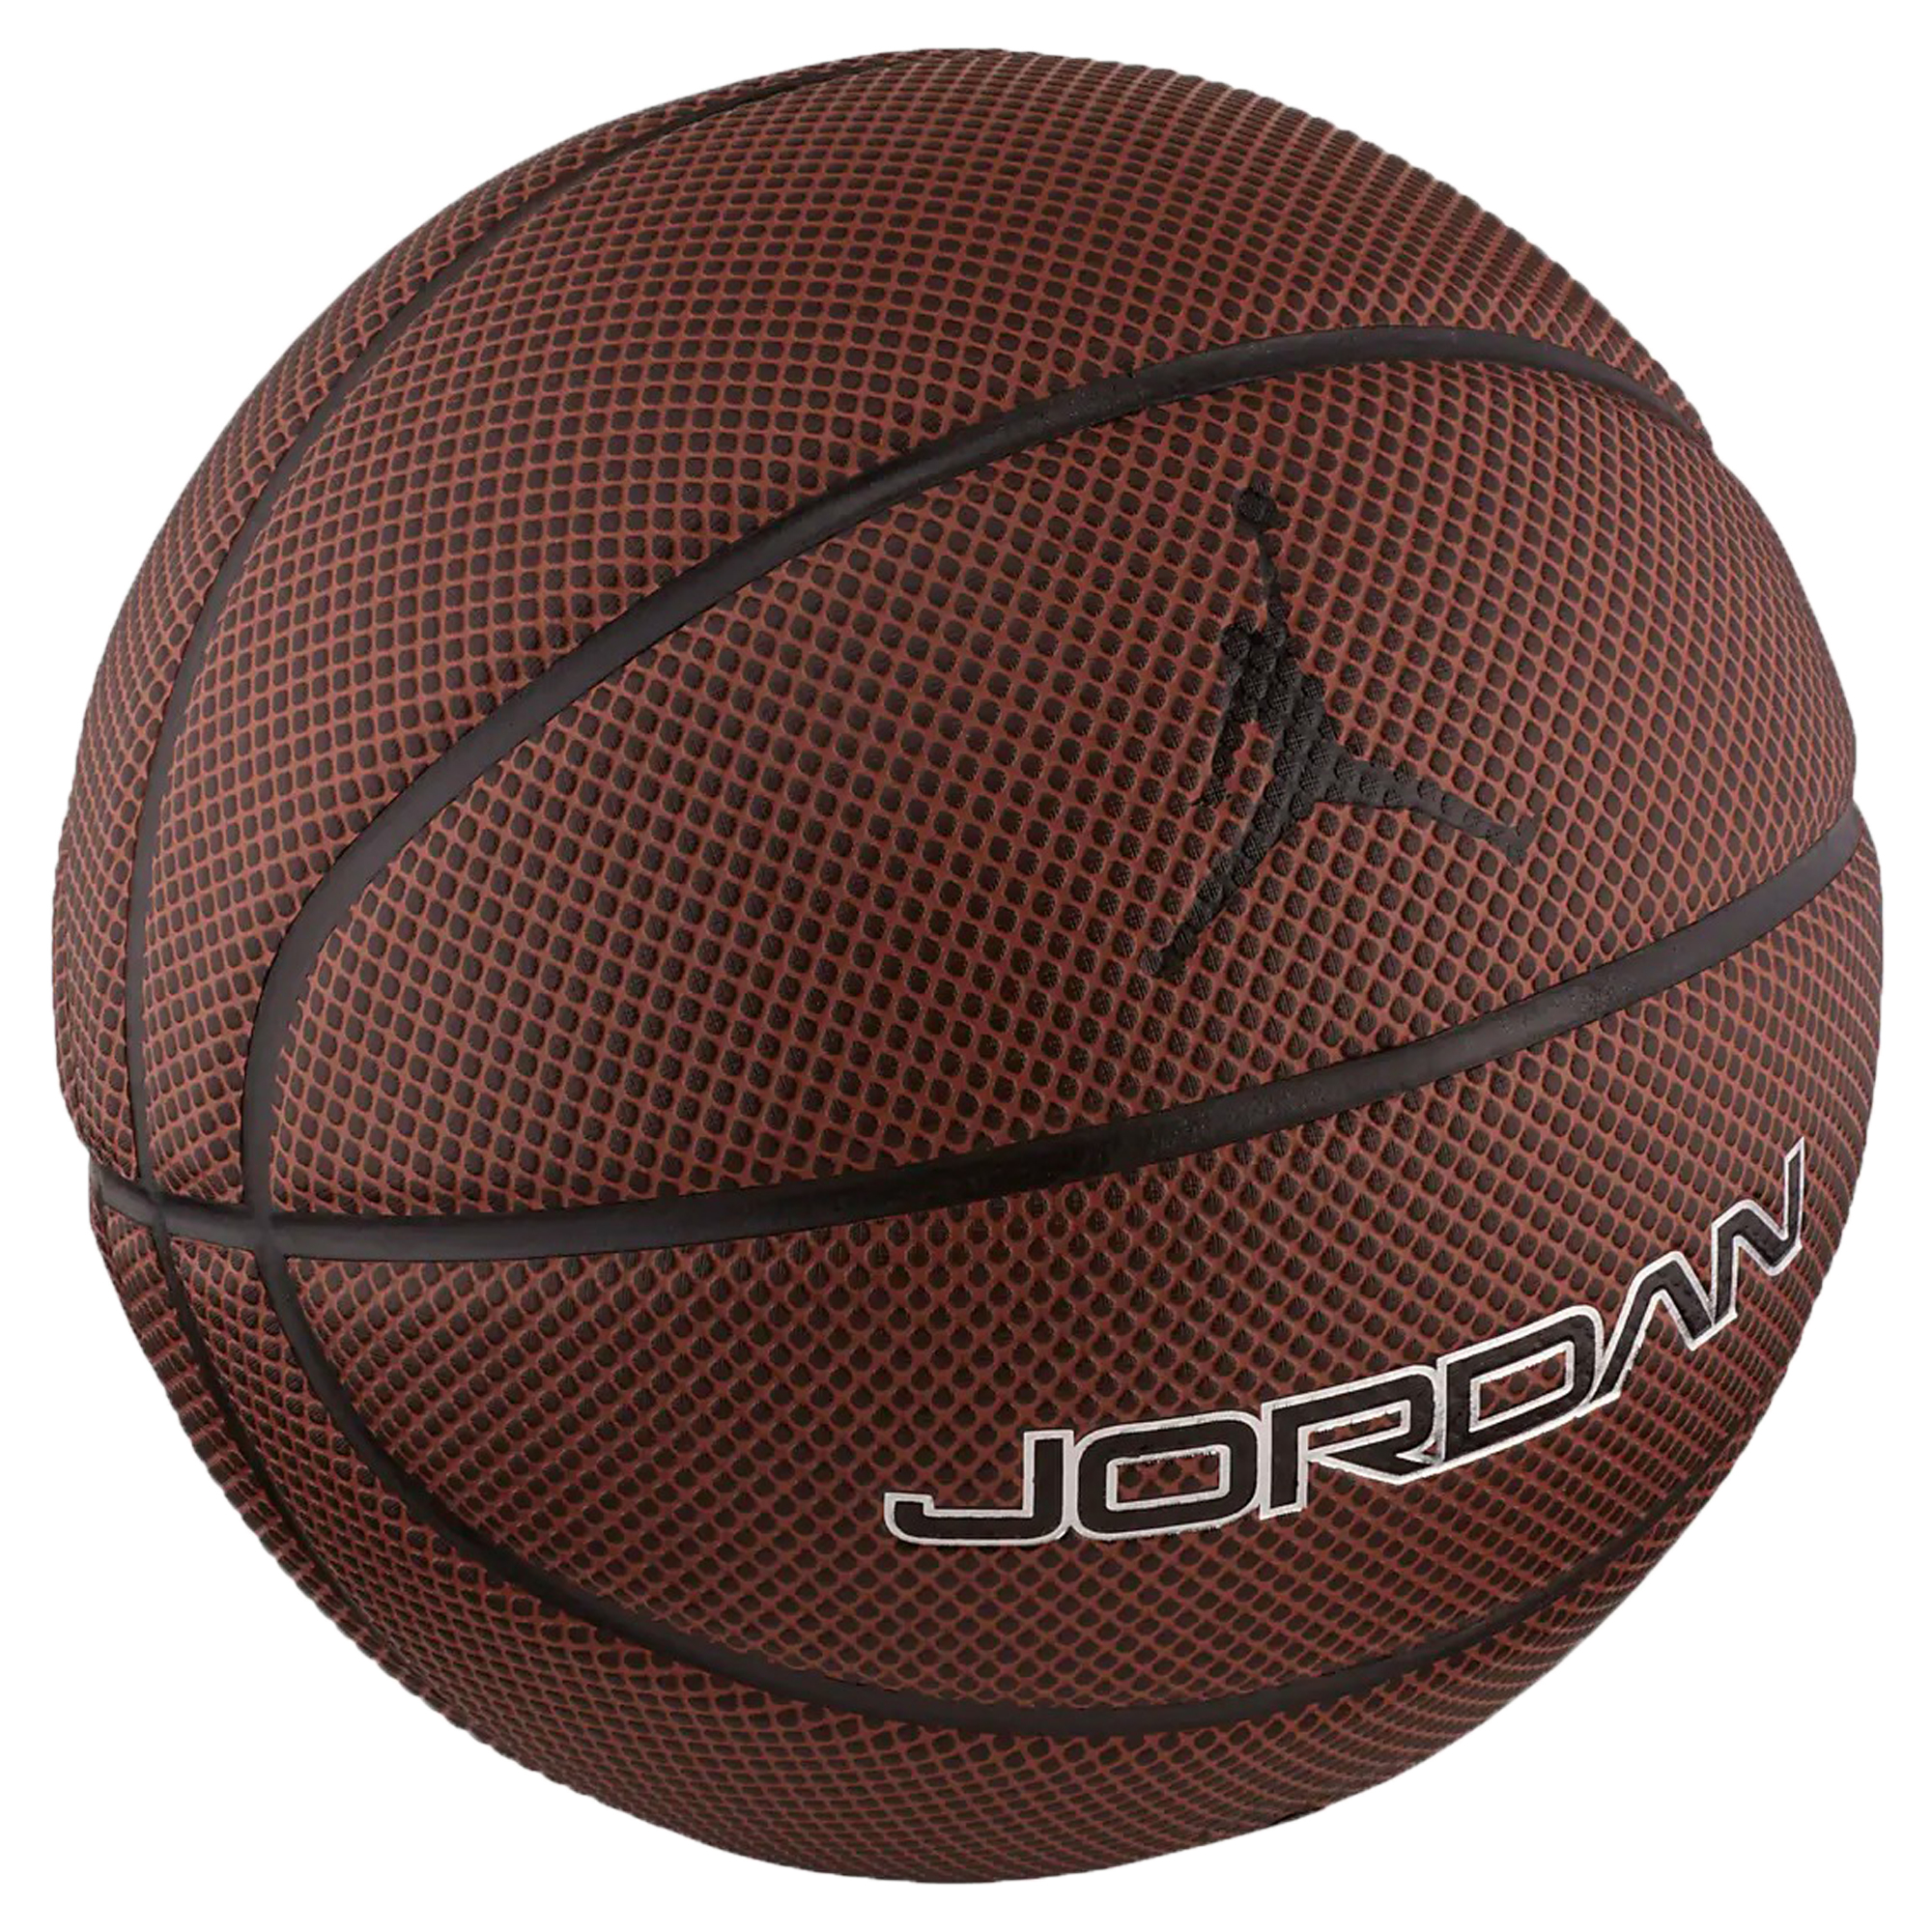 Ballon de basketball Nike Jordan Legacy 8P